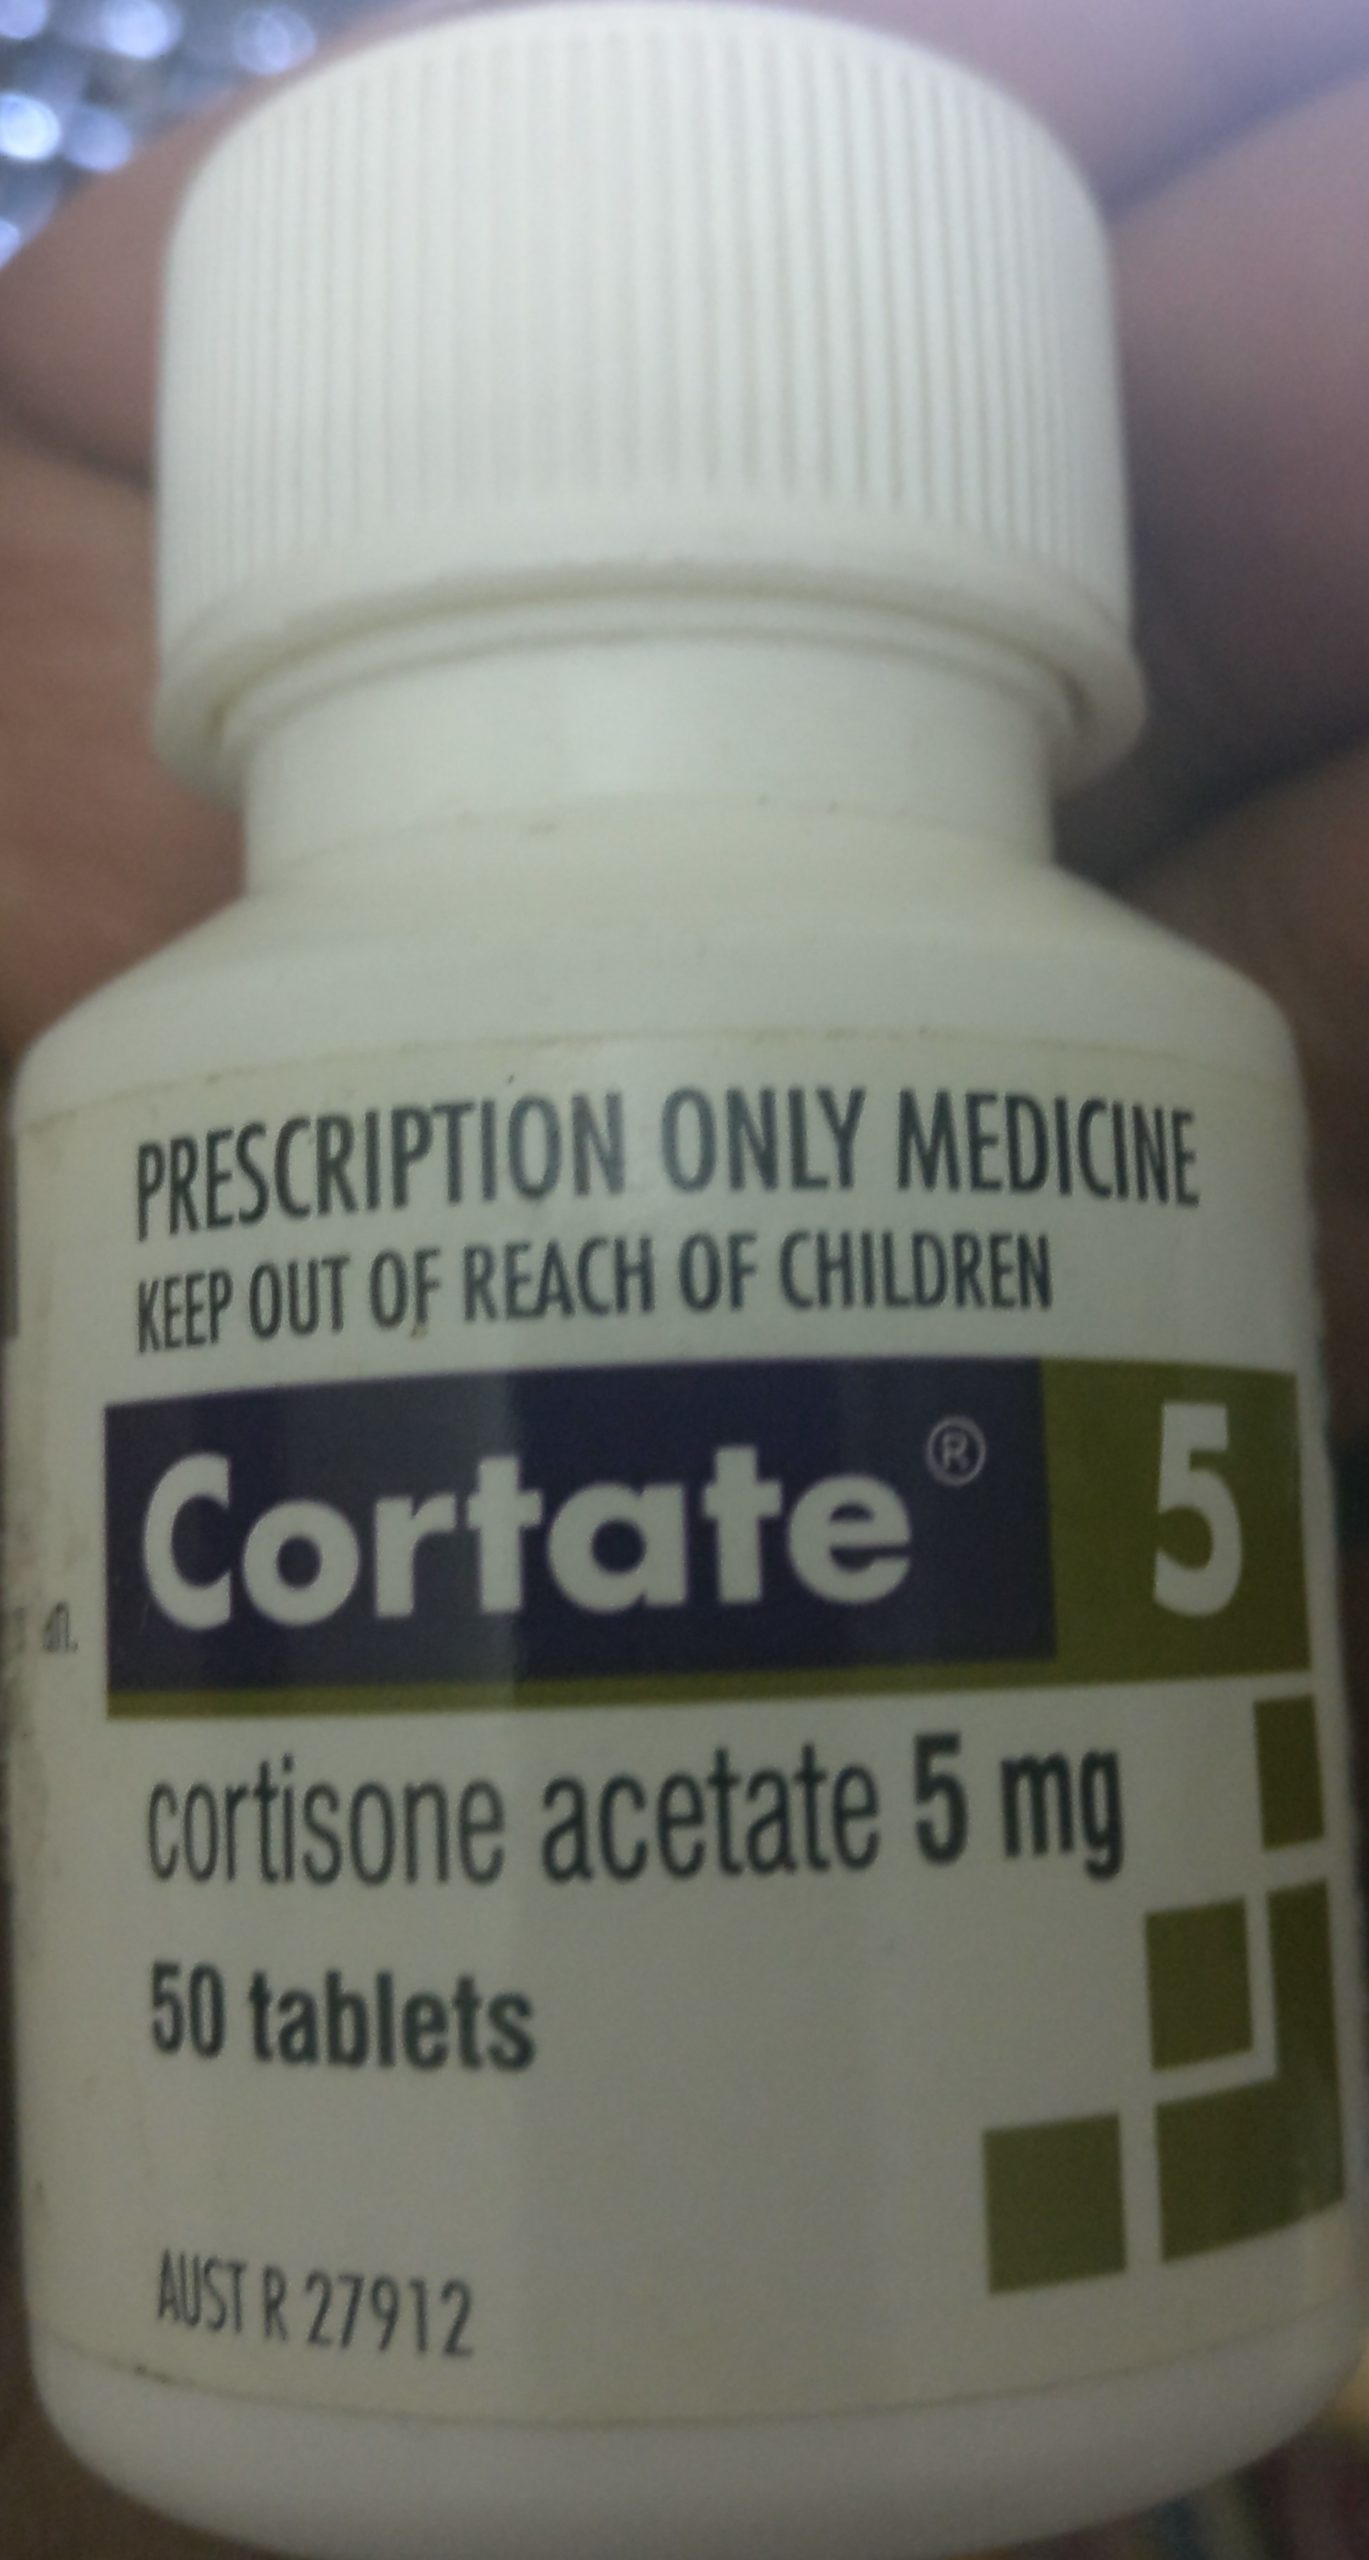 Cortate (Cortisone acetate)